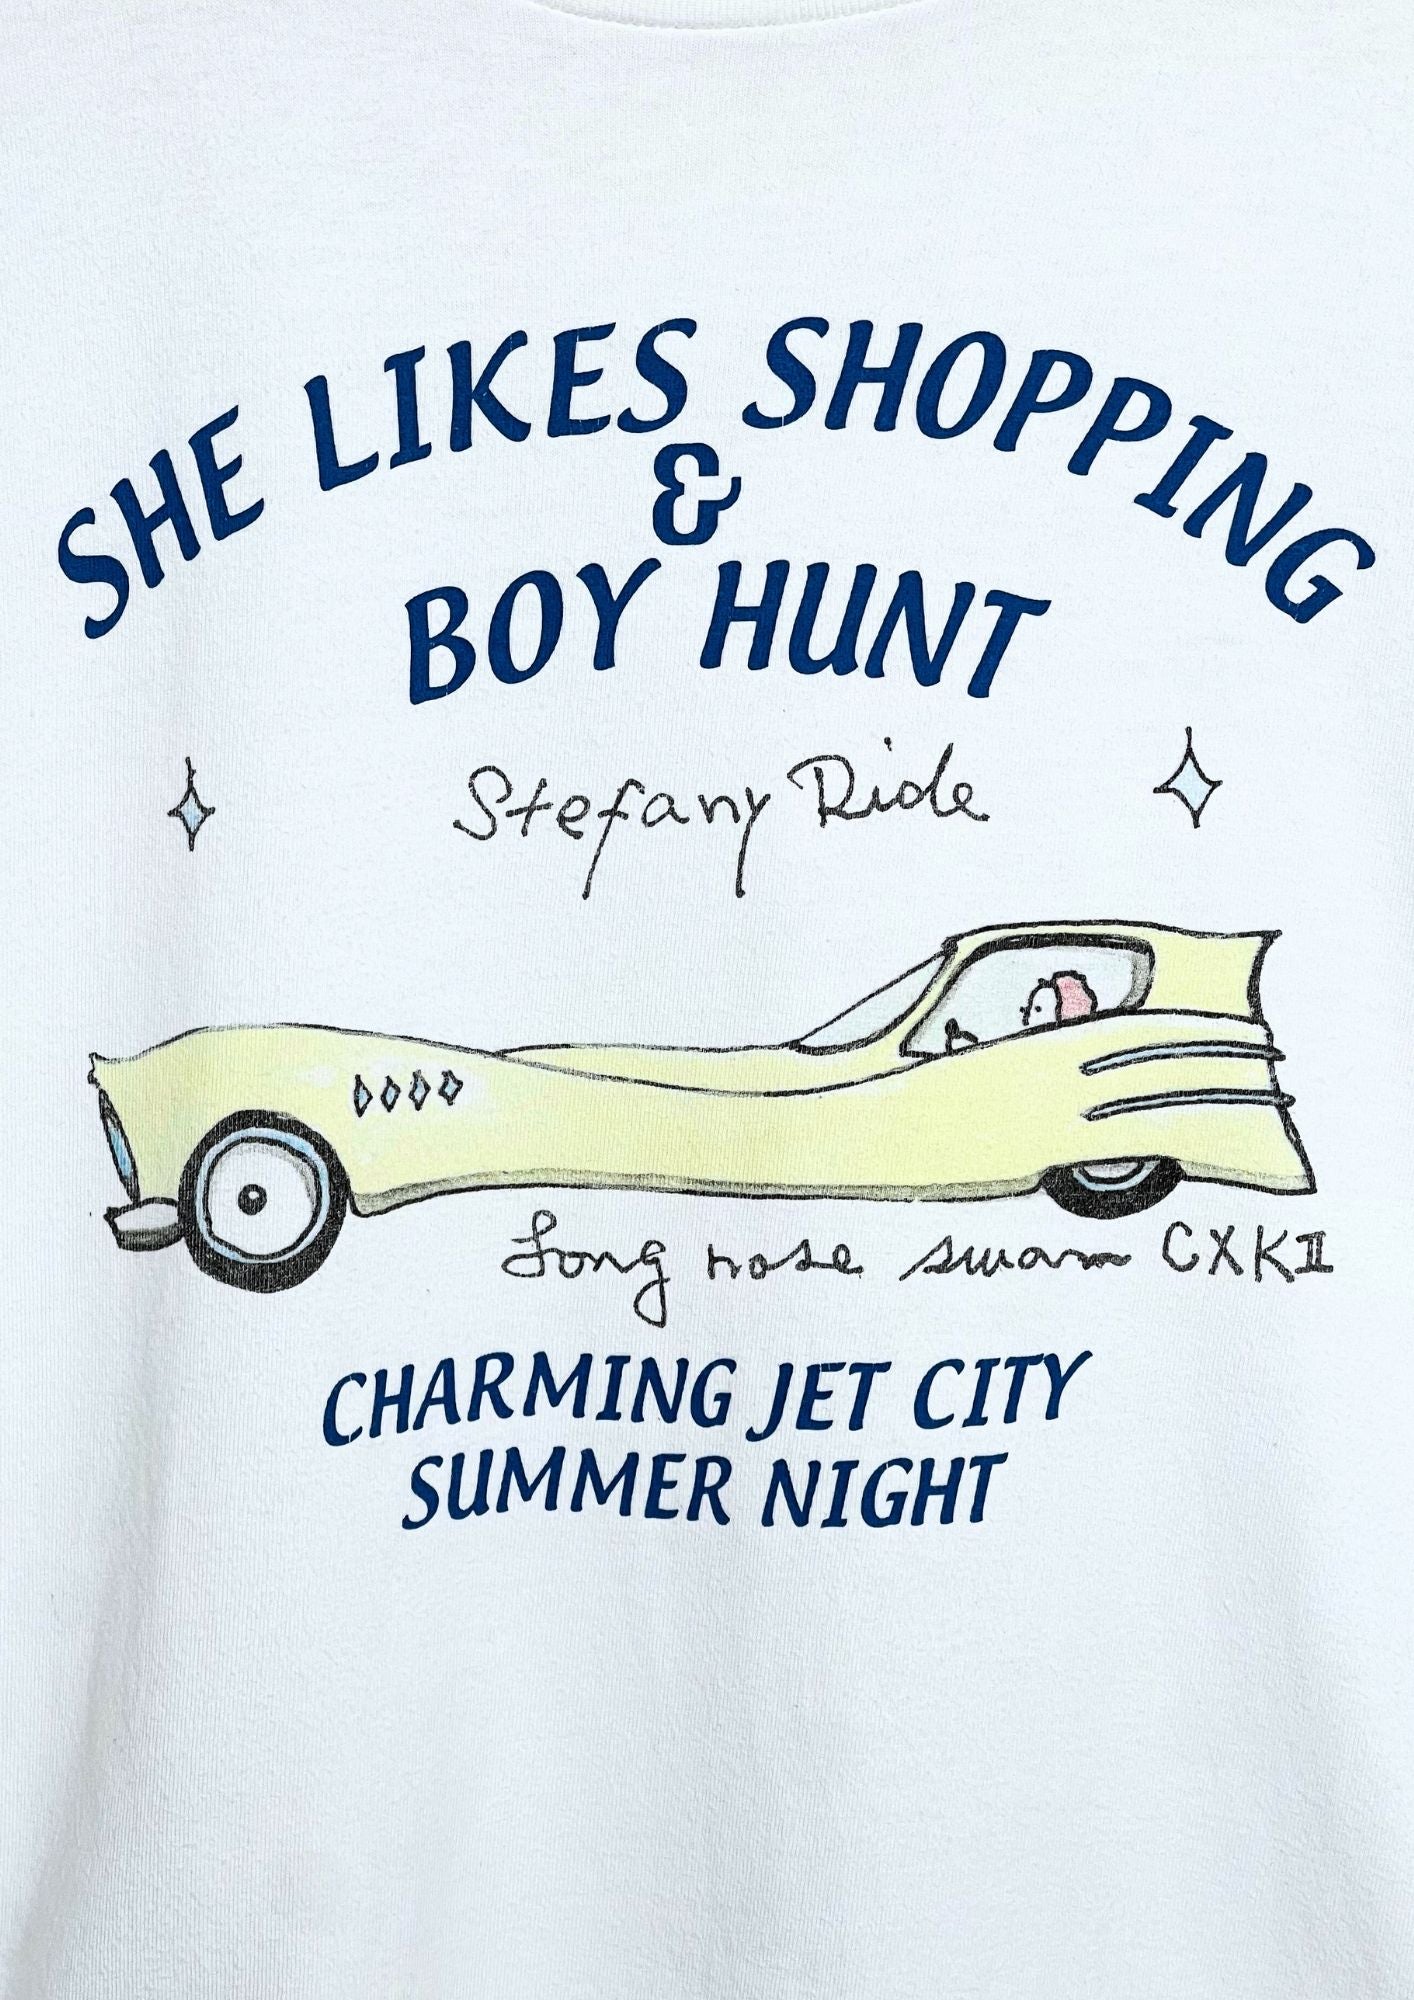 00s SHERBETS Kenichi Asai 'She Likes Shopping & Boy Hunt ' Japanese Band T-shirt